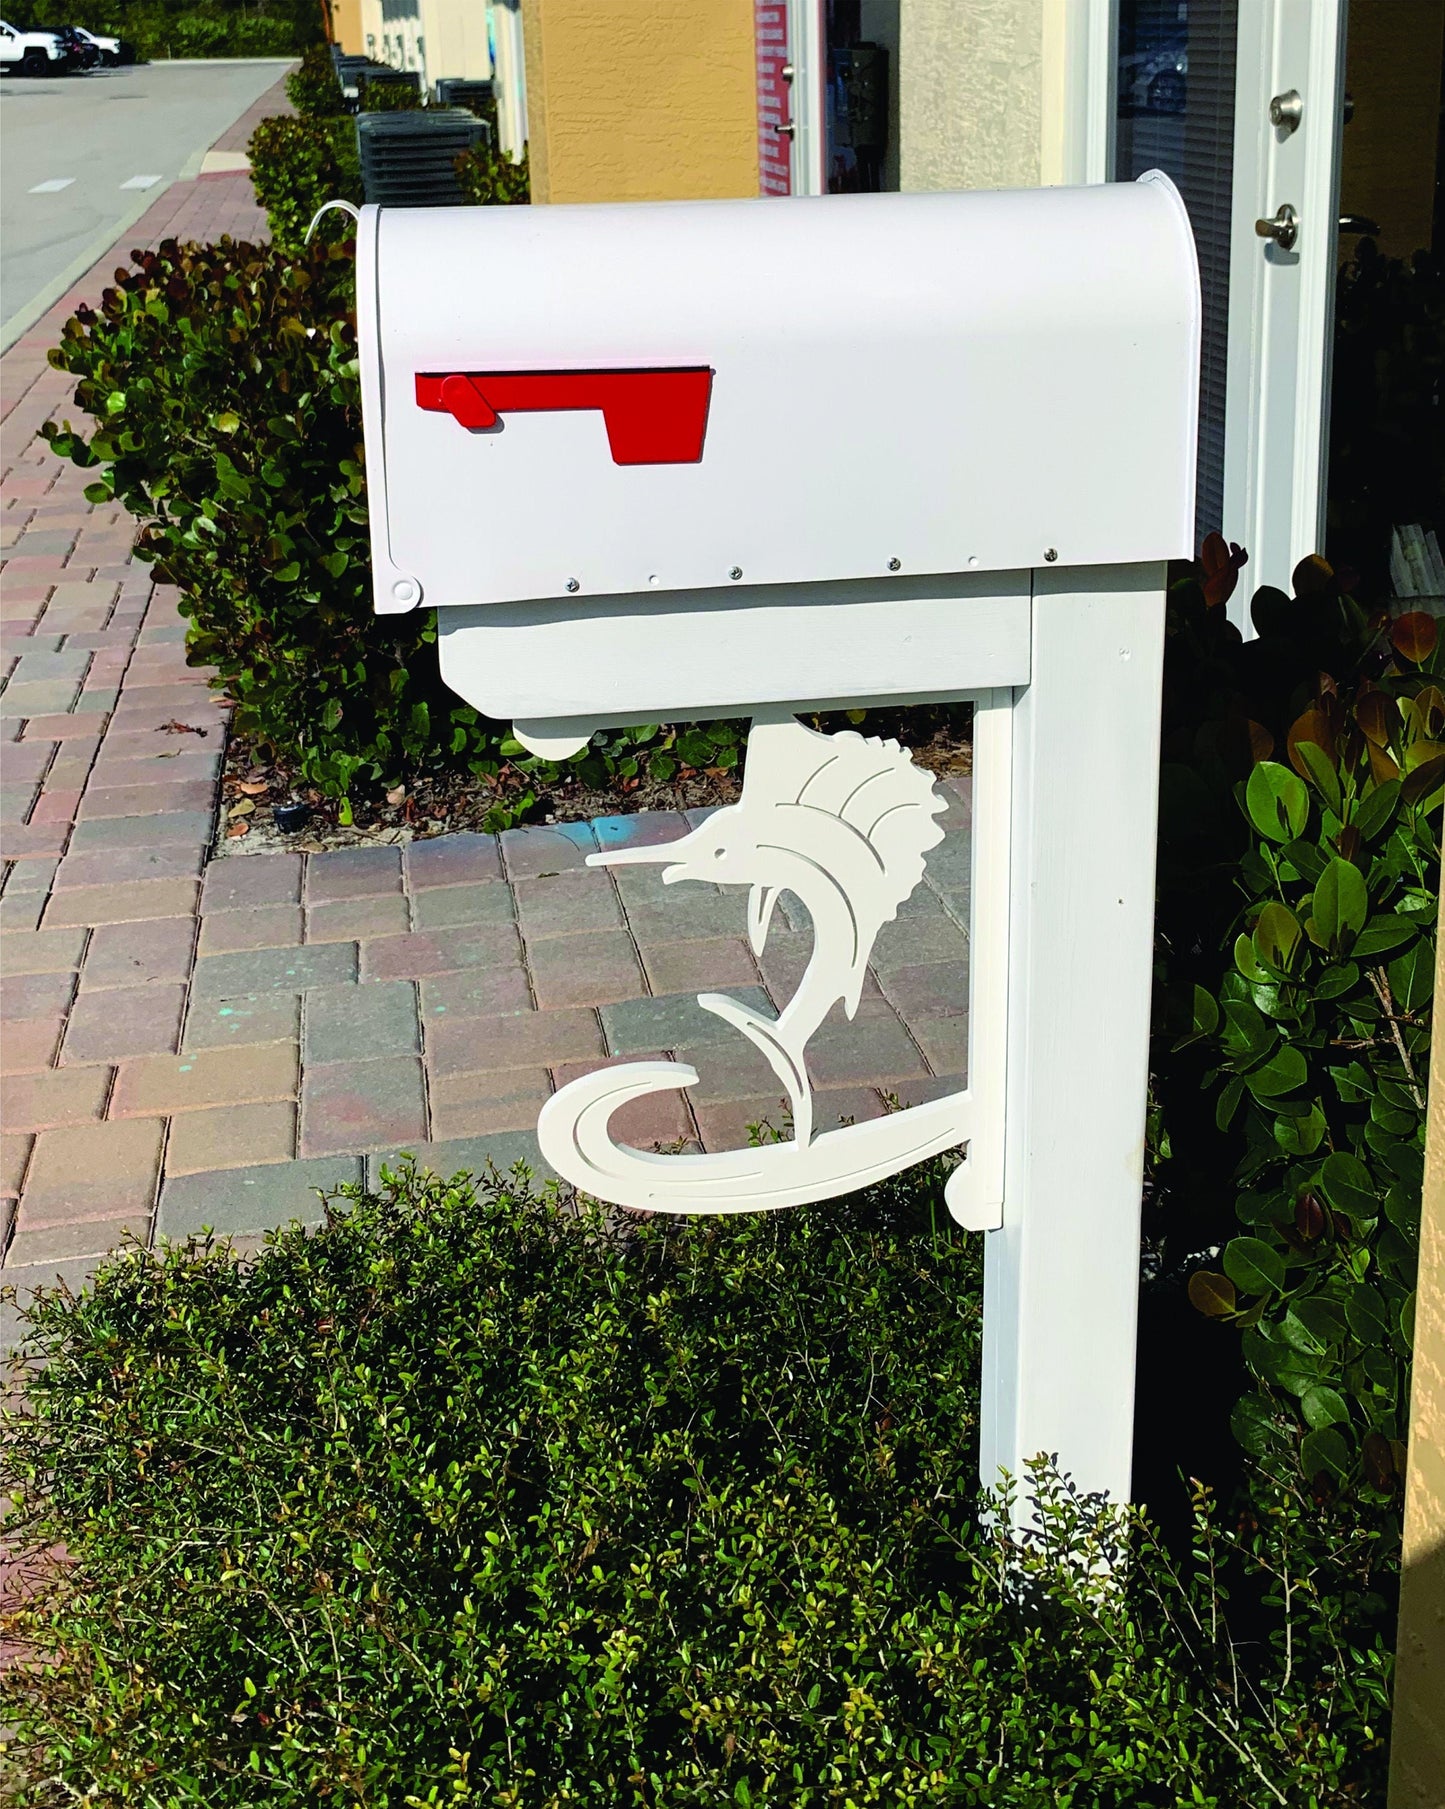 Mailbox Bracket - Sailfish Design Medium, Coastal, Custom Mailbox, Bracket, Outdoor Decor, Housewarming Gift, Mailbox & Post Not Included